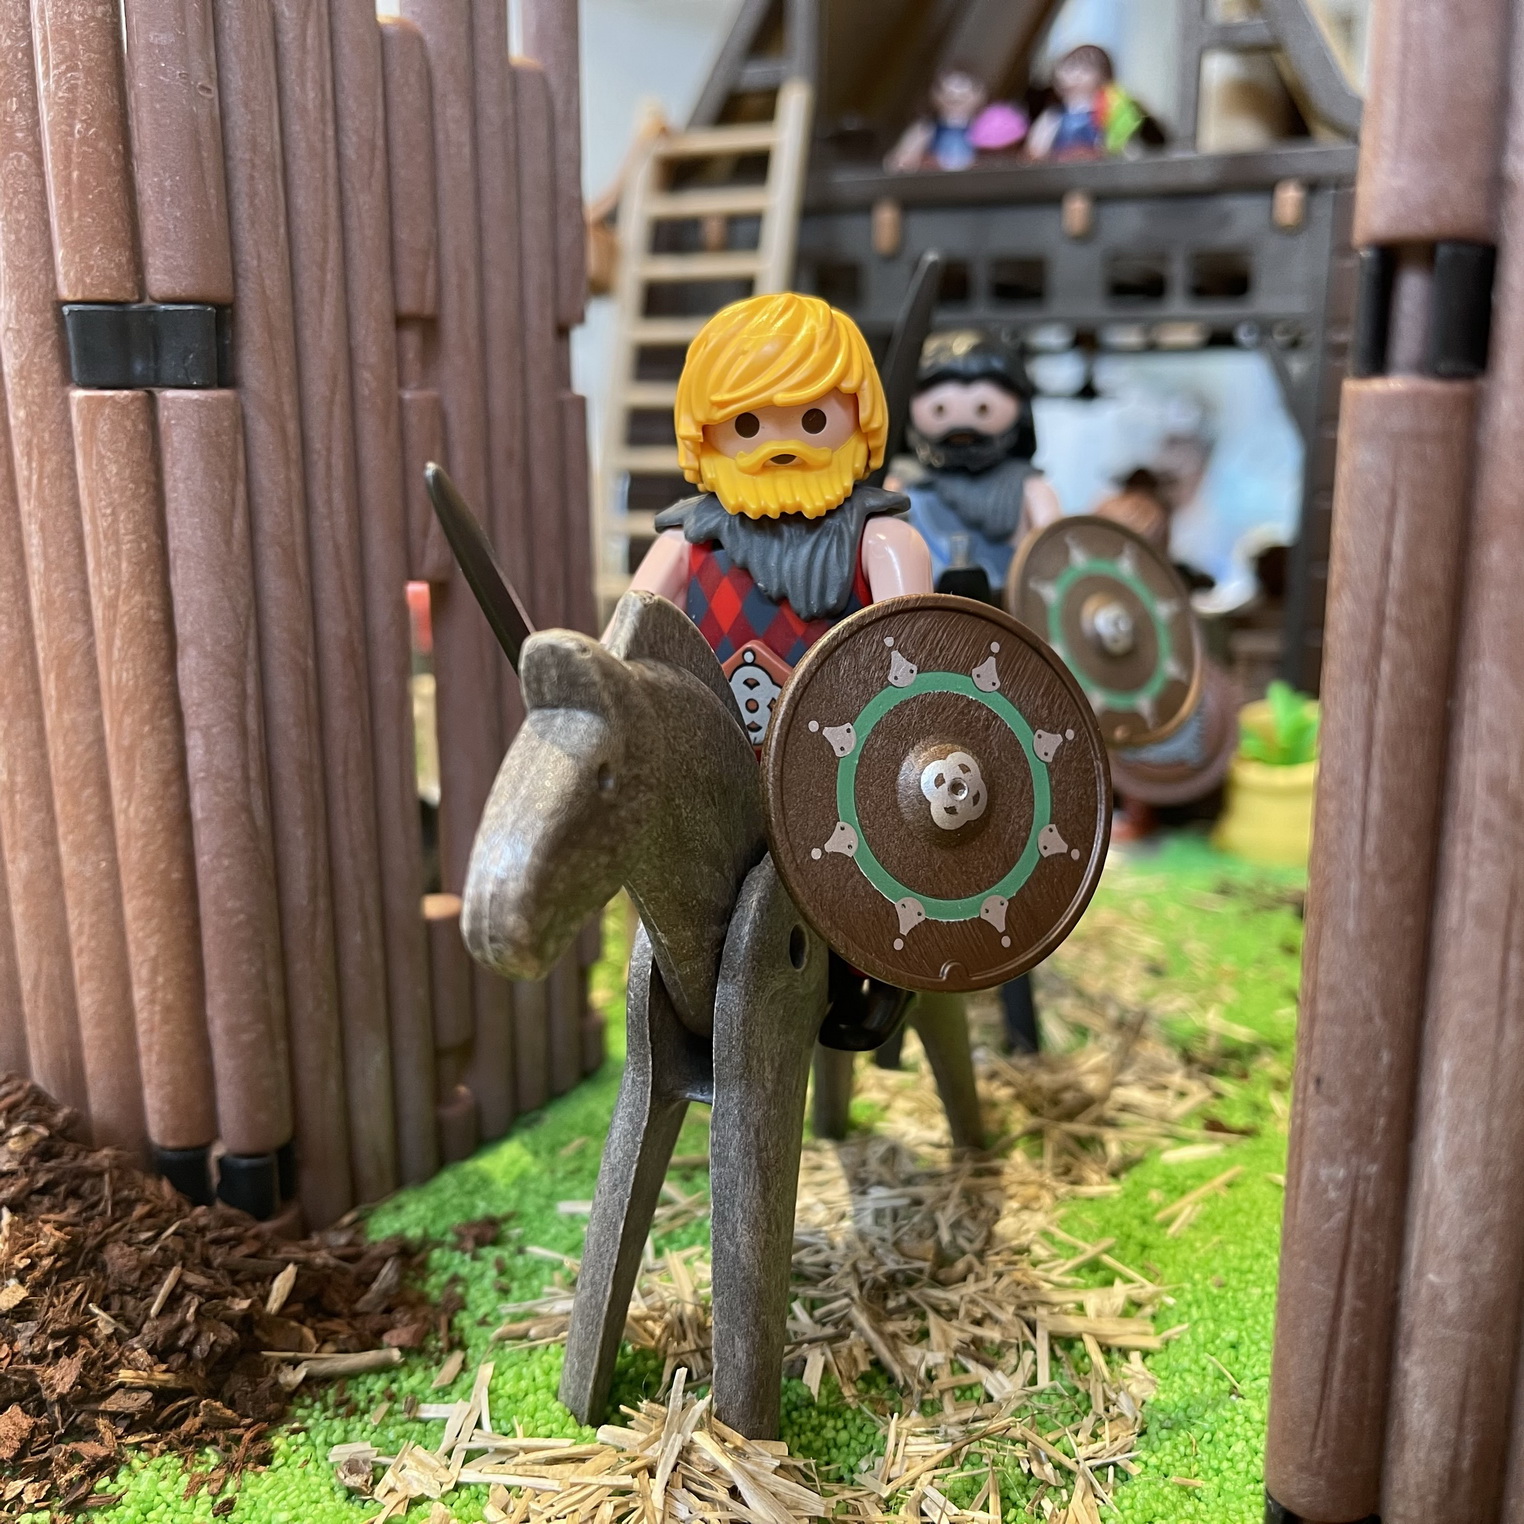 PLAYMOBIL-Szene mit bewaffnetem Reiter auf Pferd